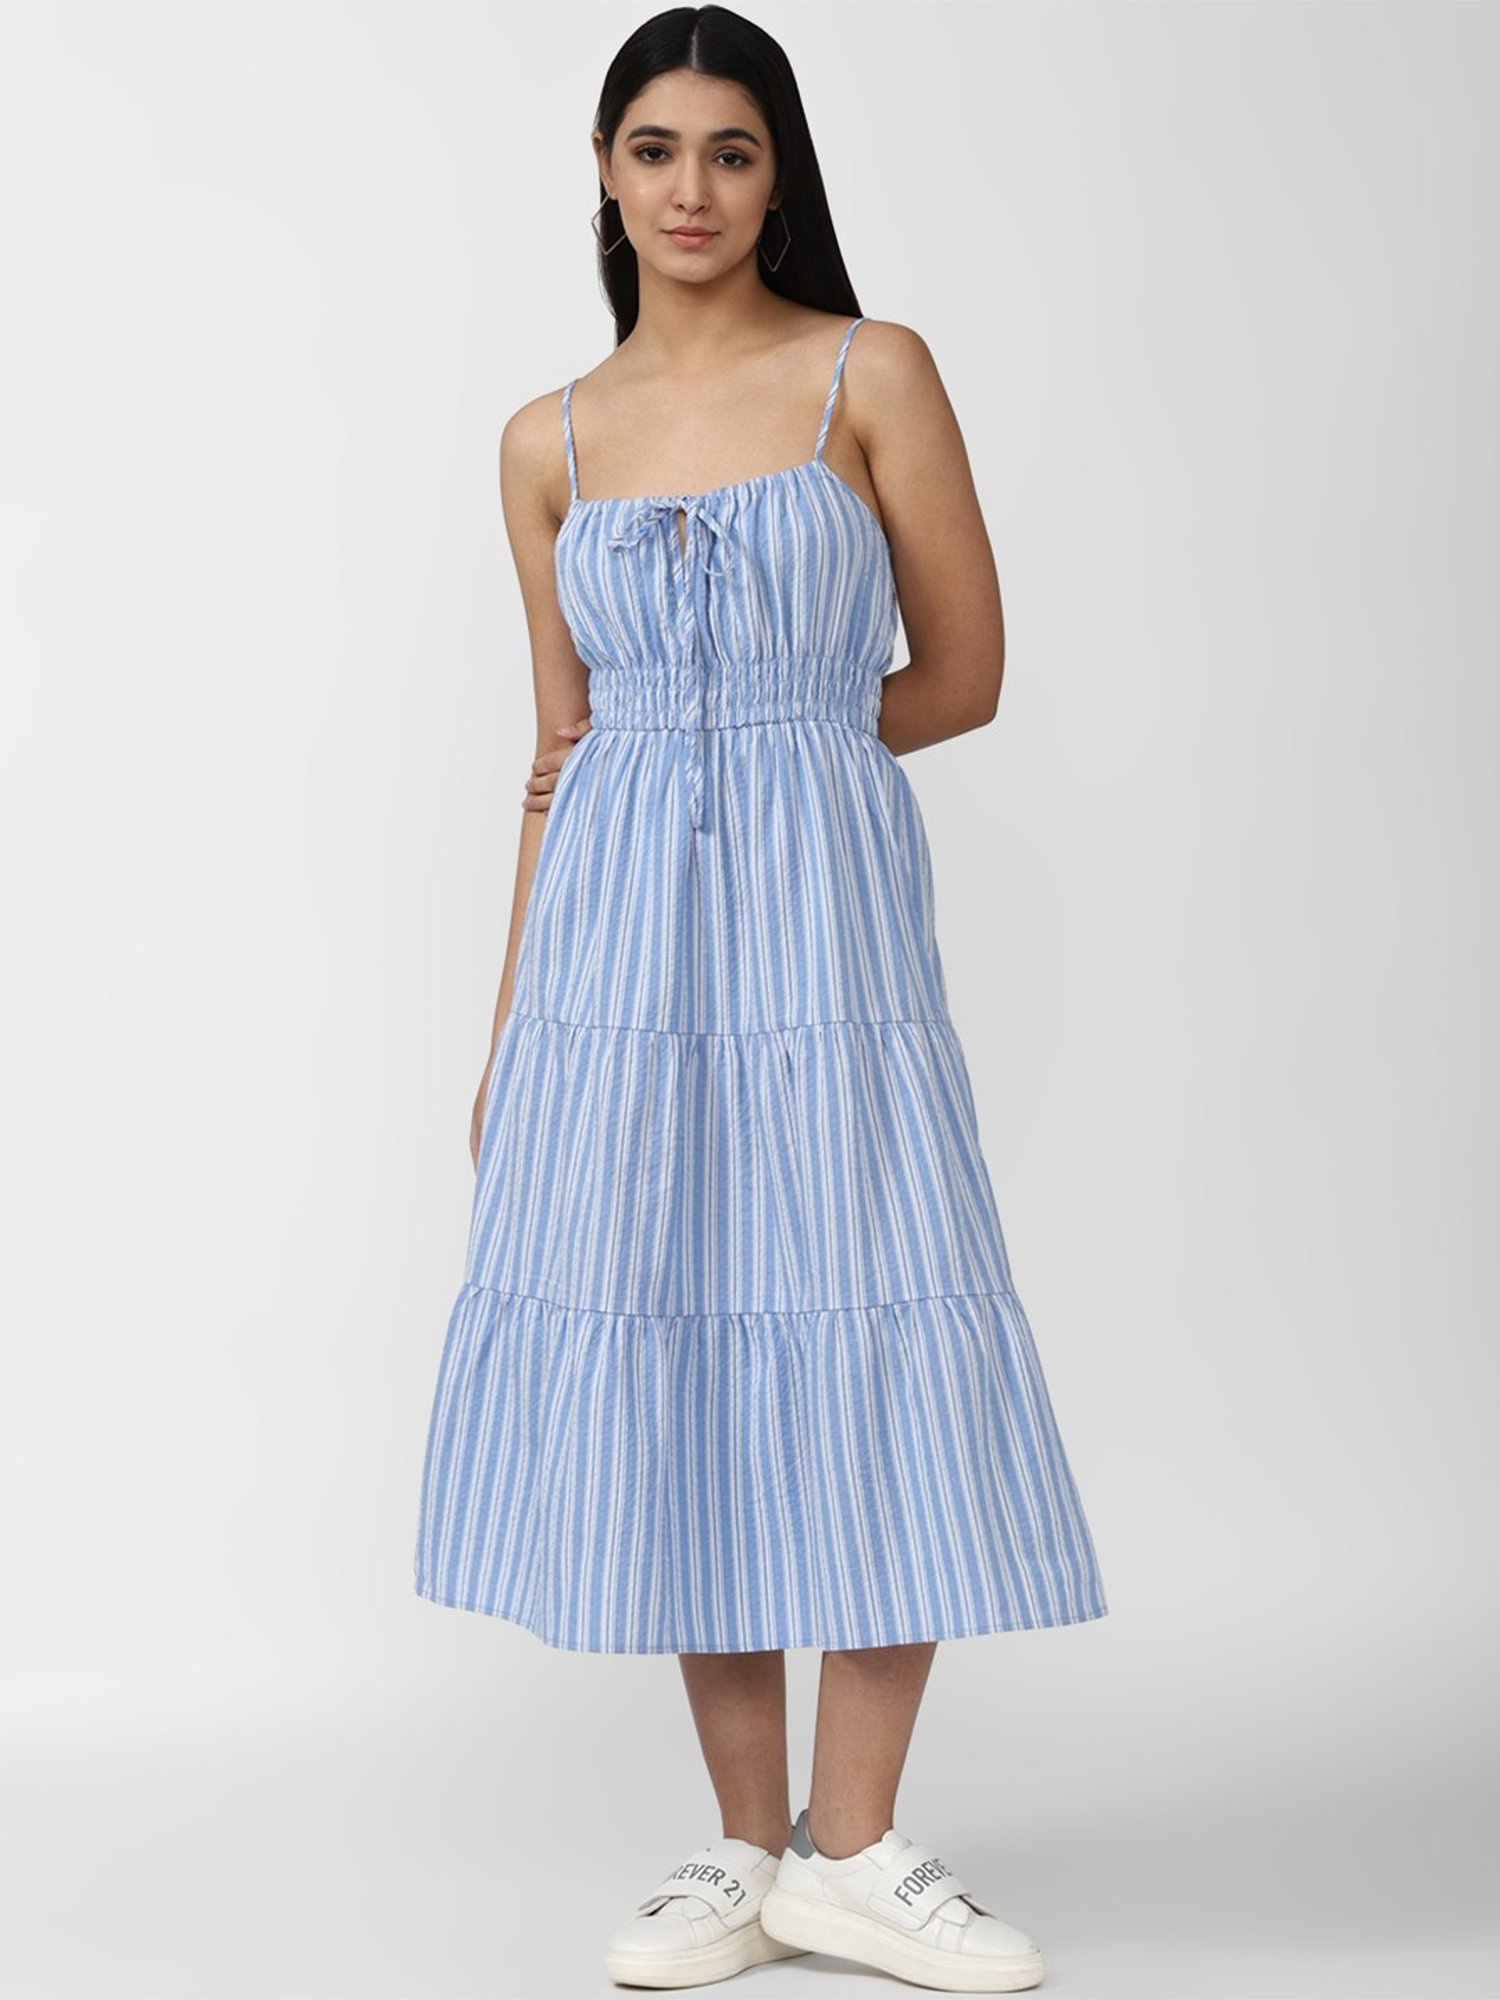 Plus Size midi knit dress plus size striped summer dress halter dress